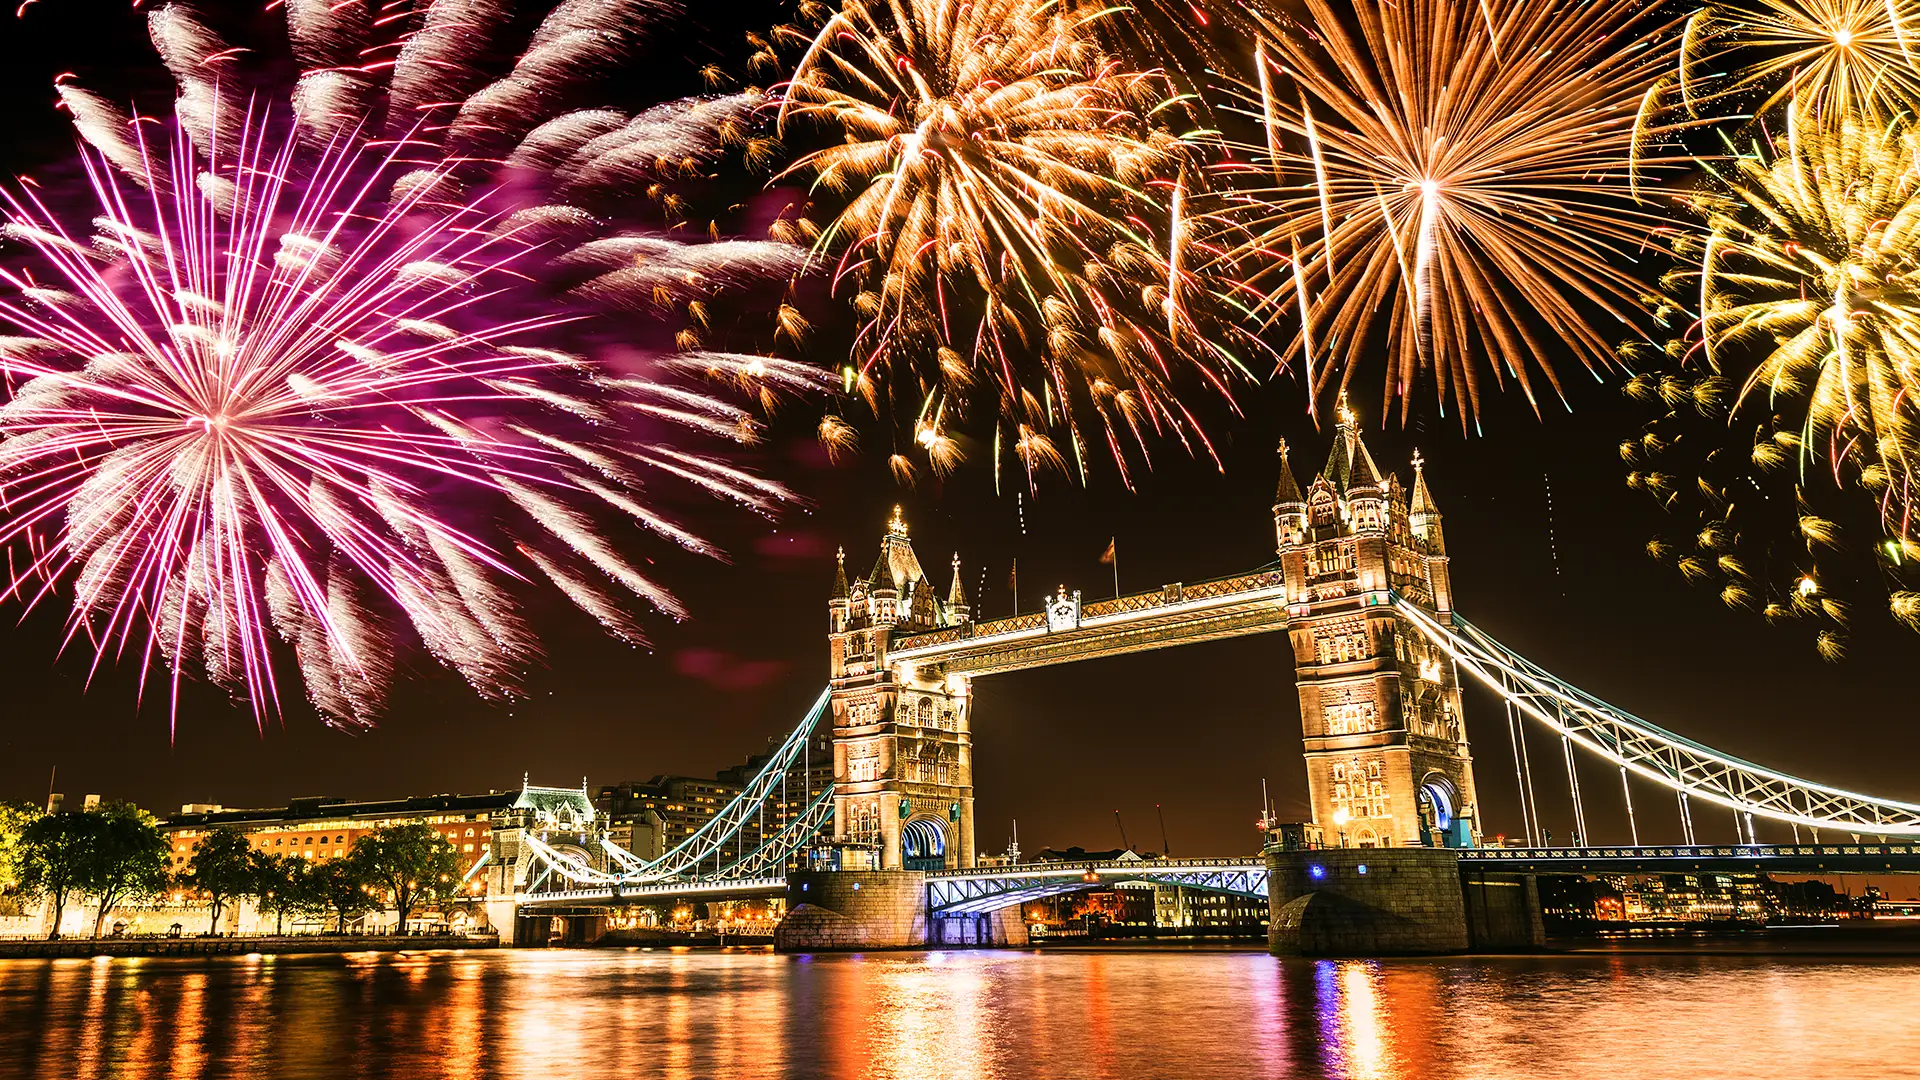 Fireworks display over Tower Bridge in London